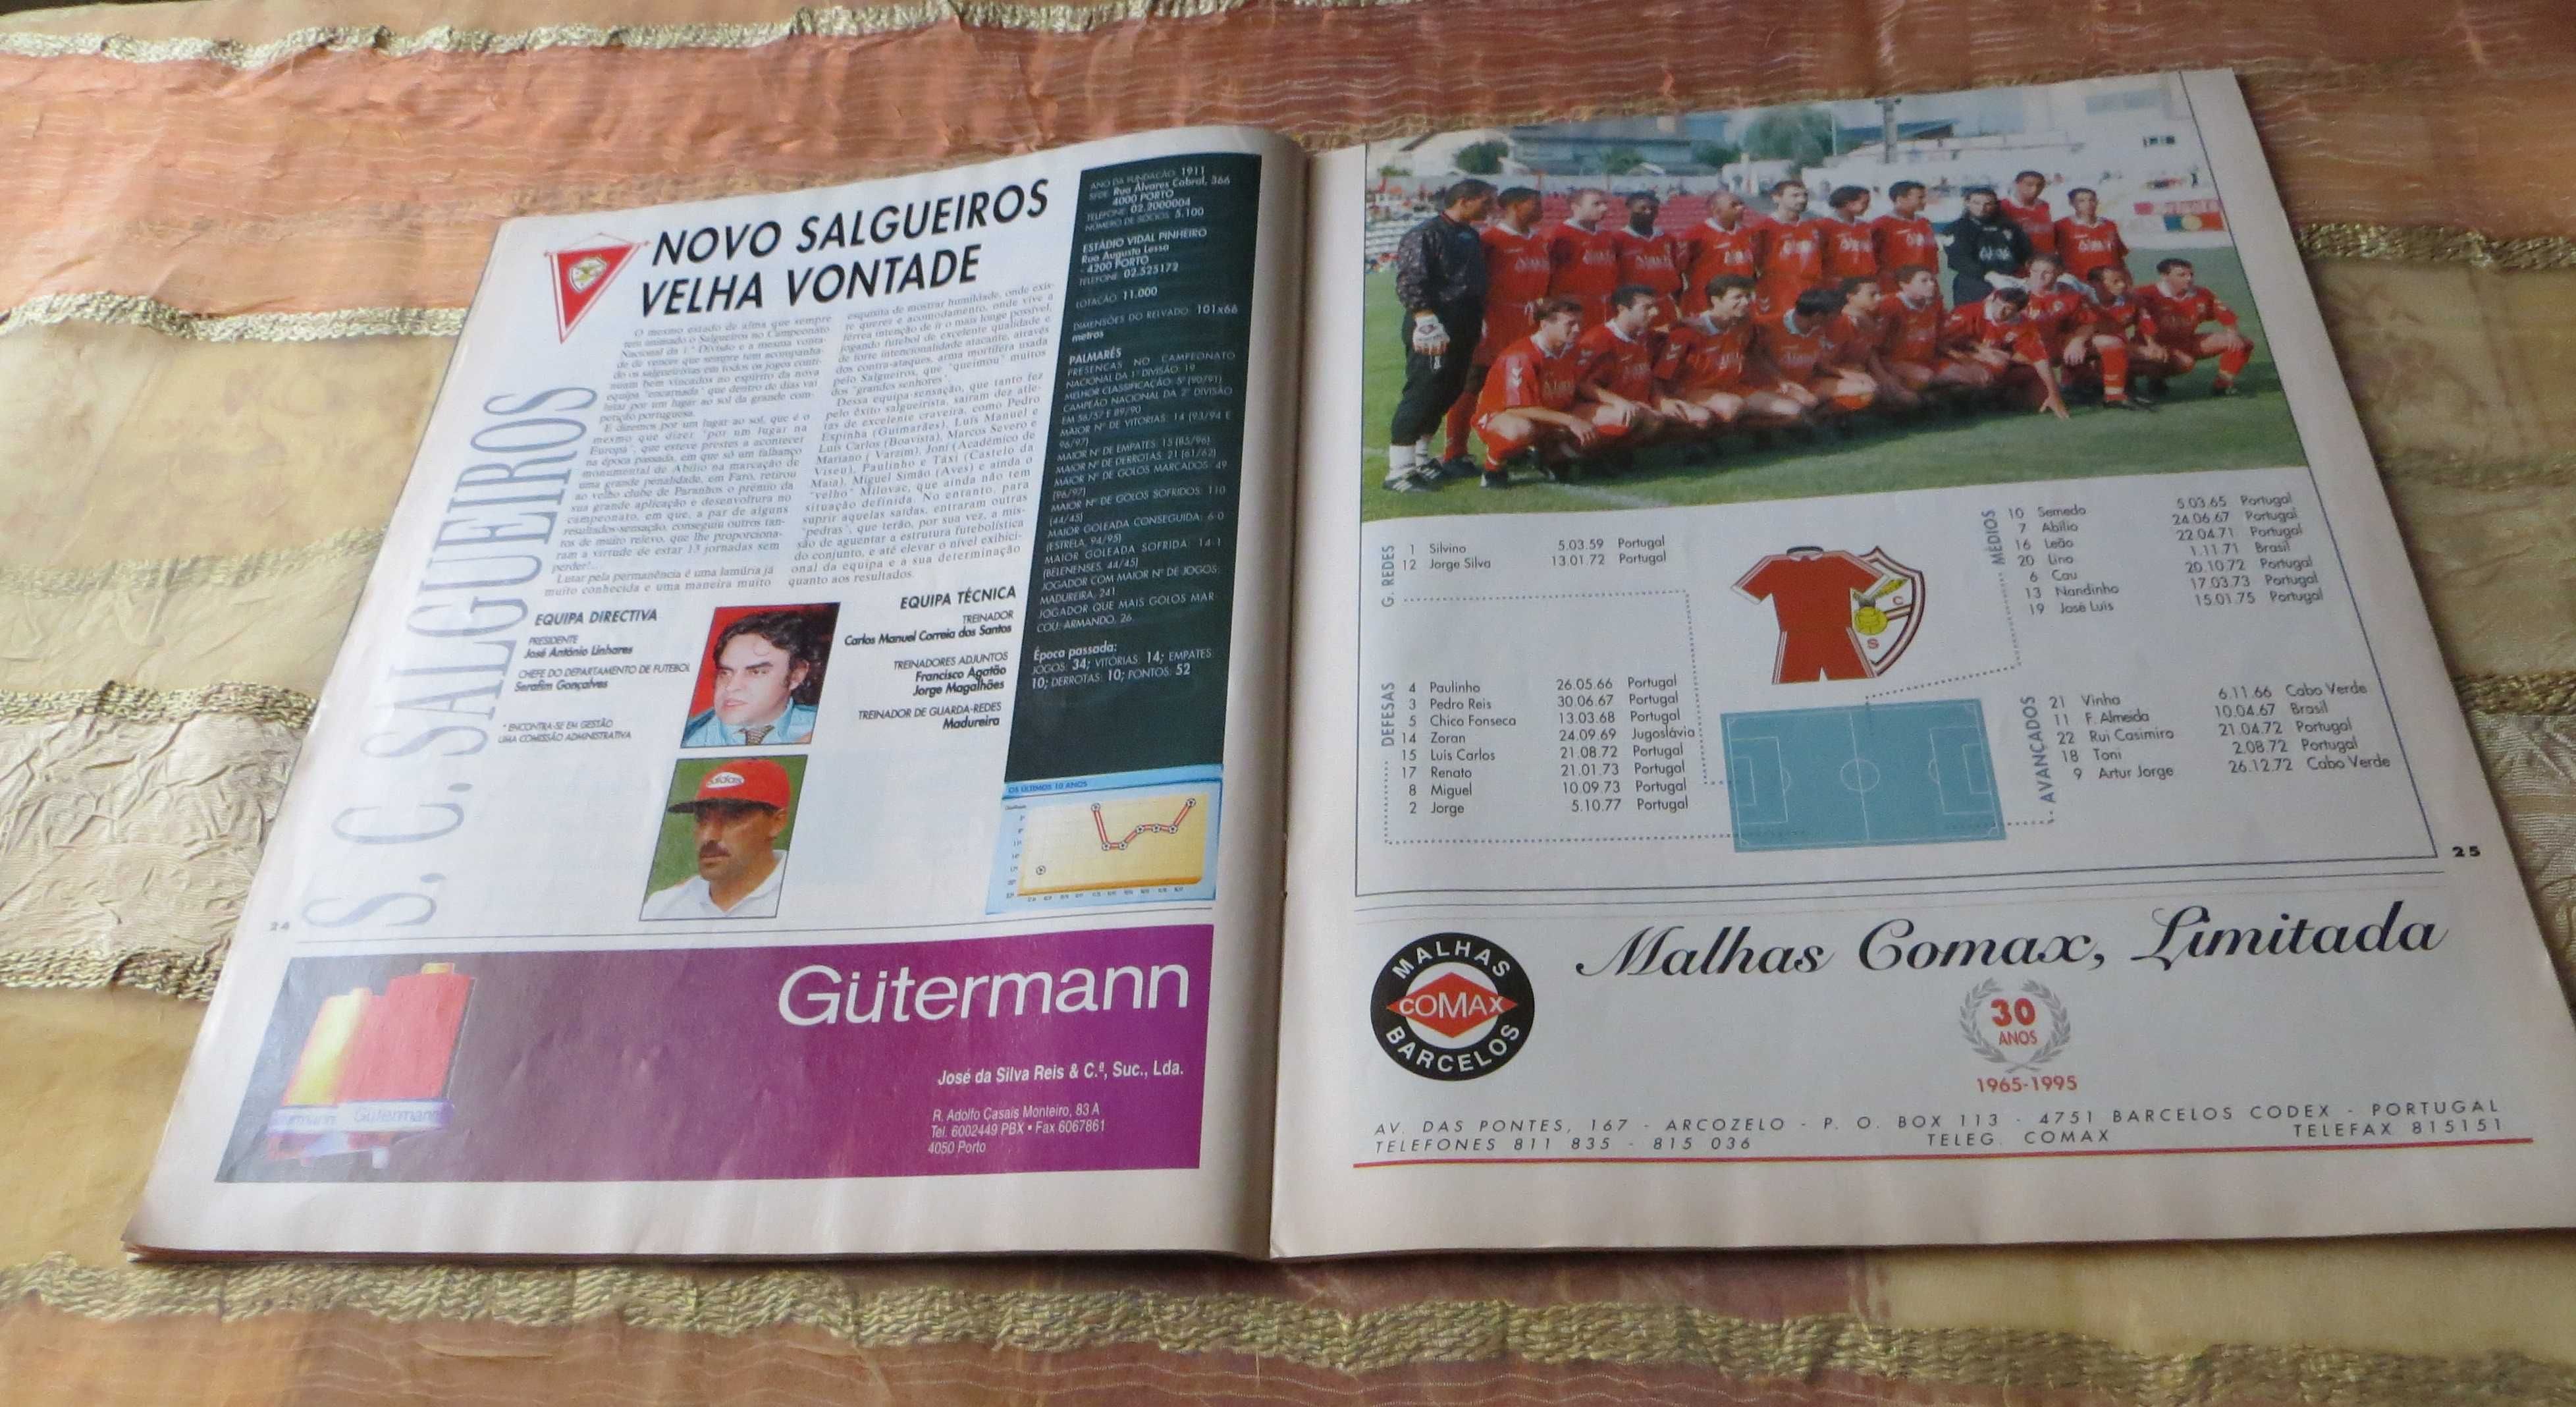 Revista JN Campeonato 97/98 - Oferta VHS c/ jogos